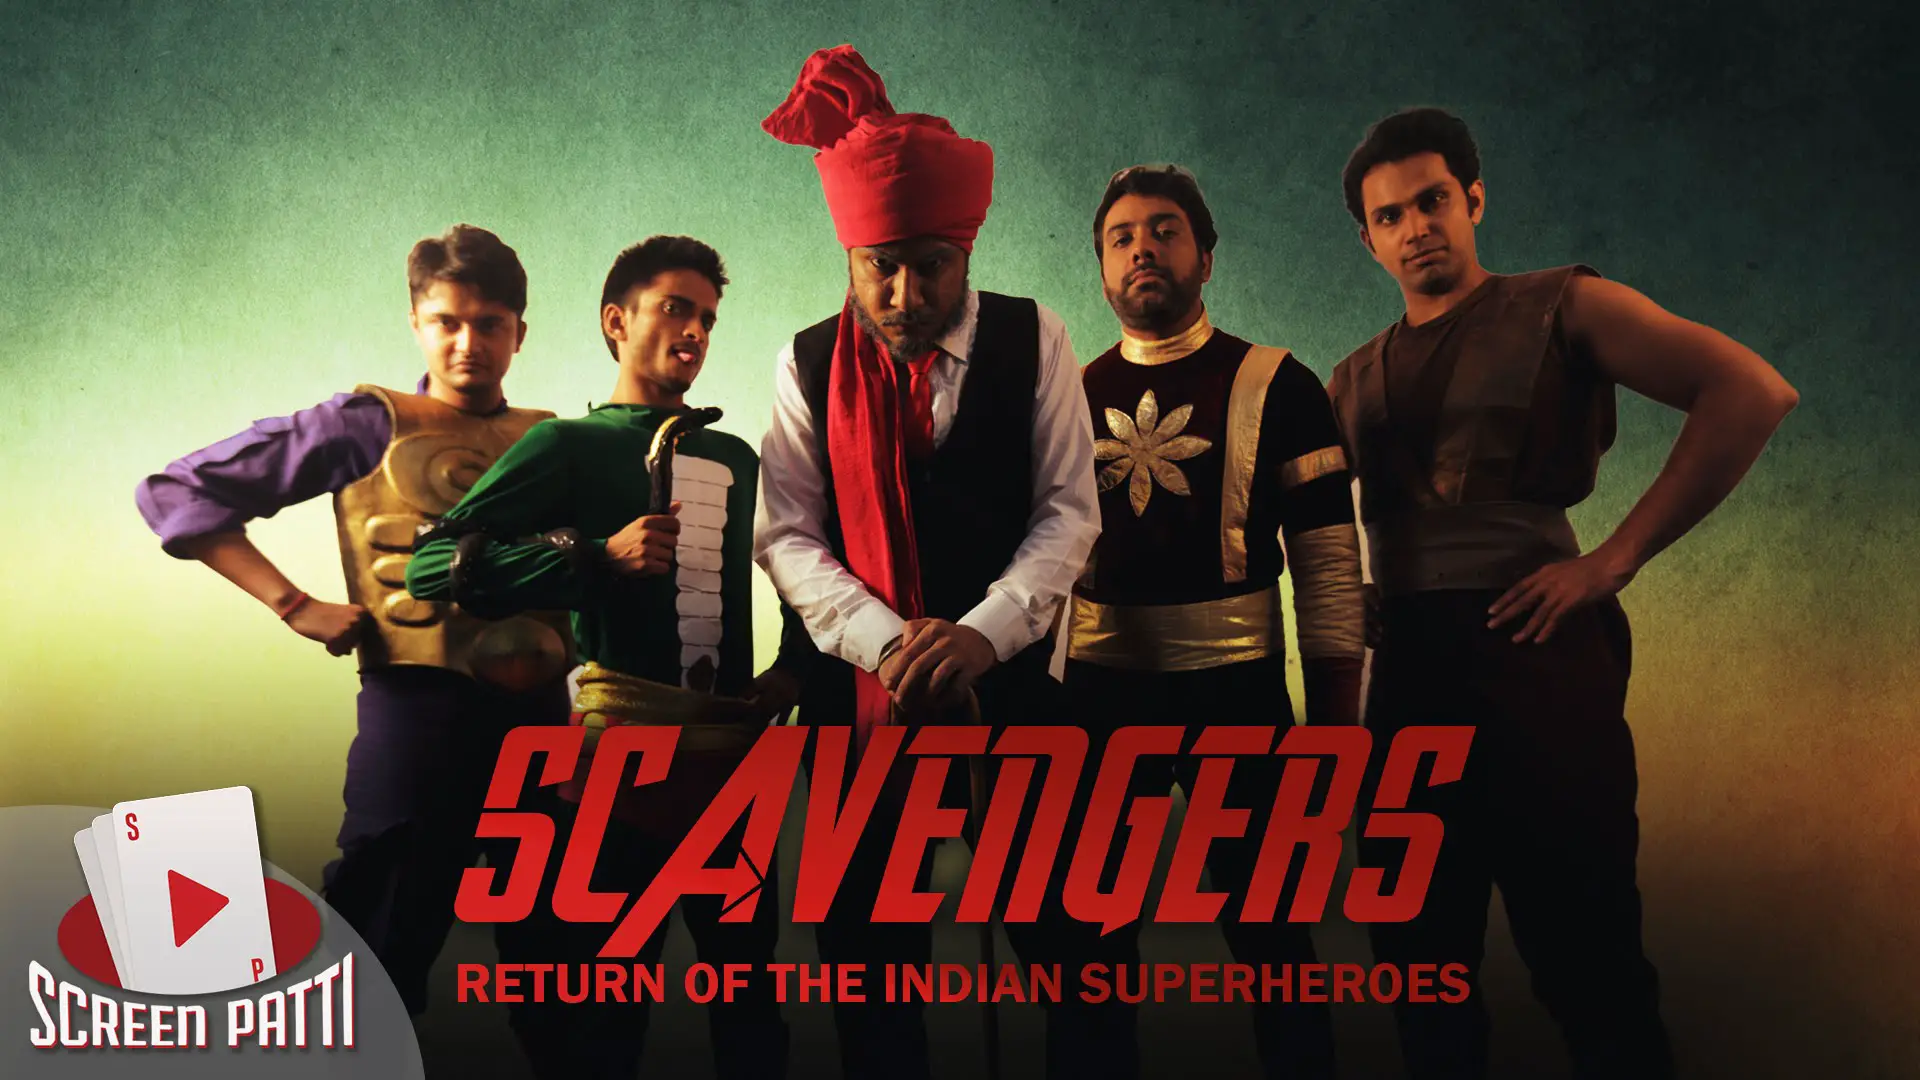 ScreenPatti’s Indian Superheroes